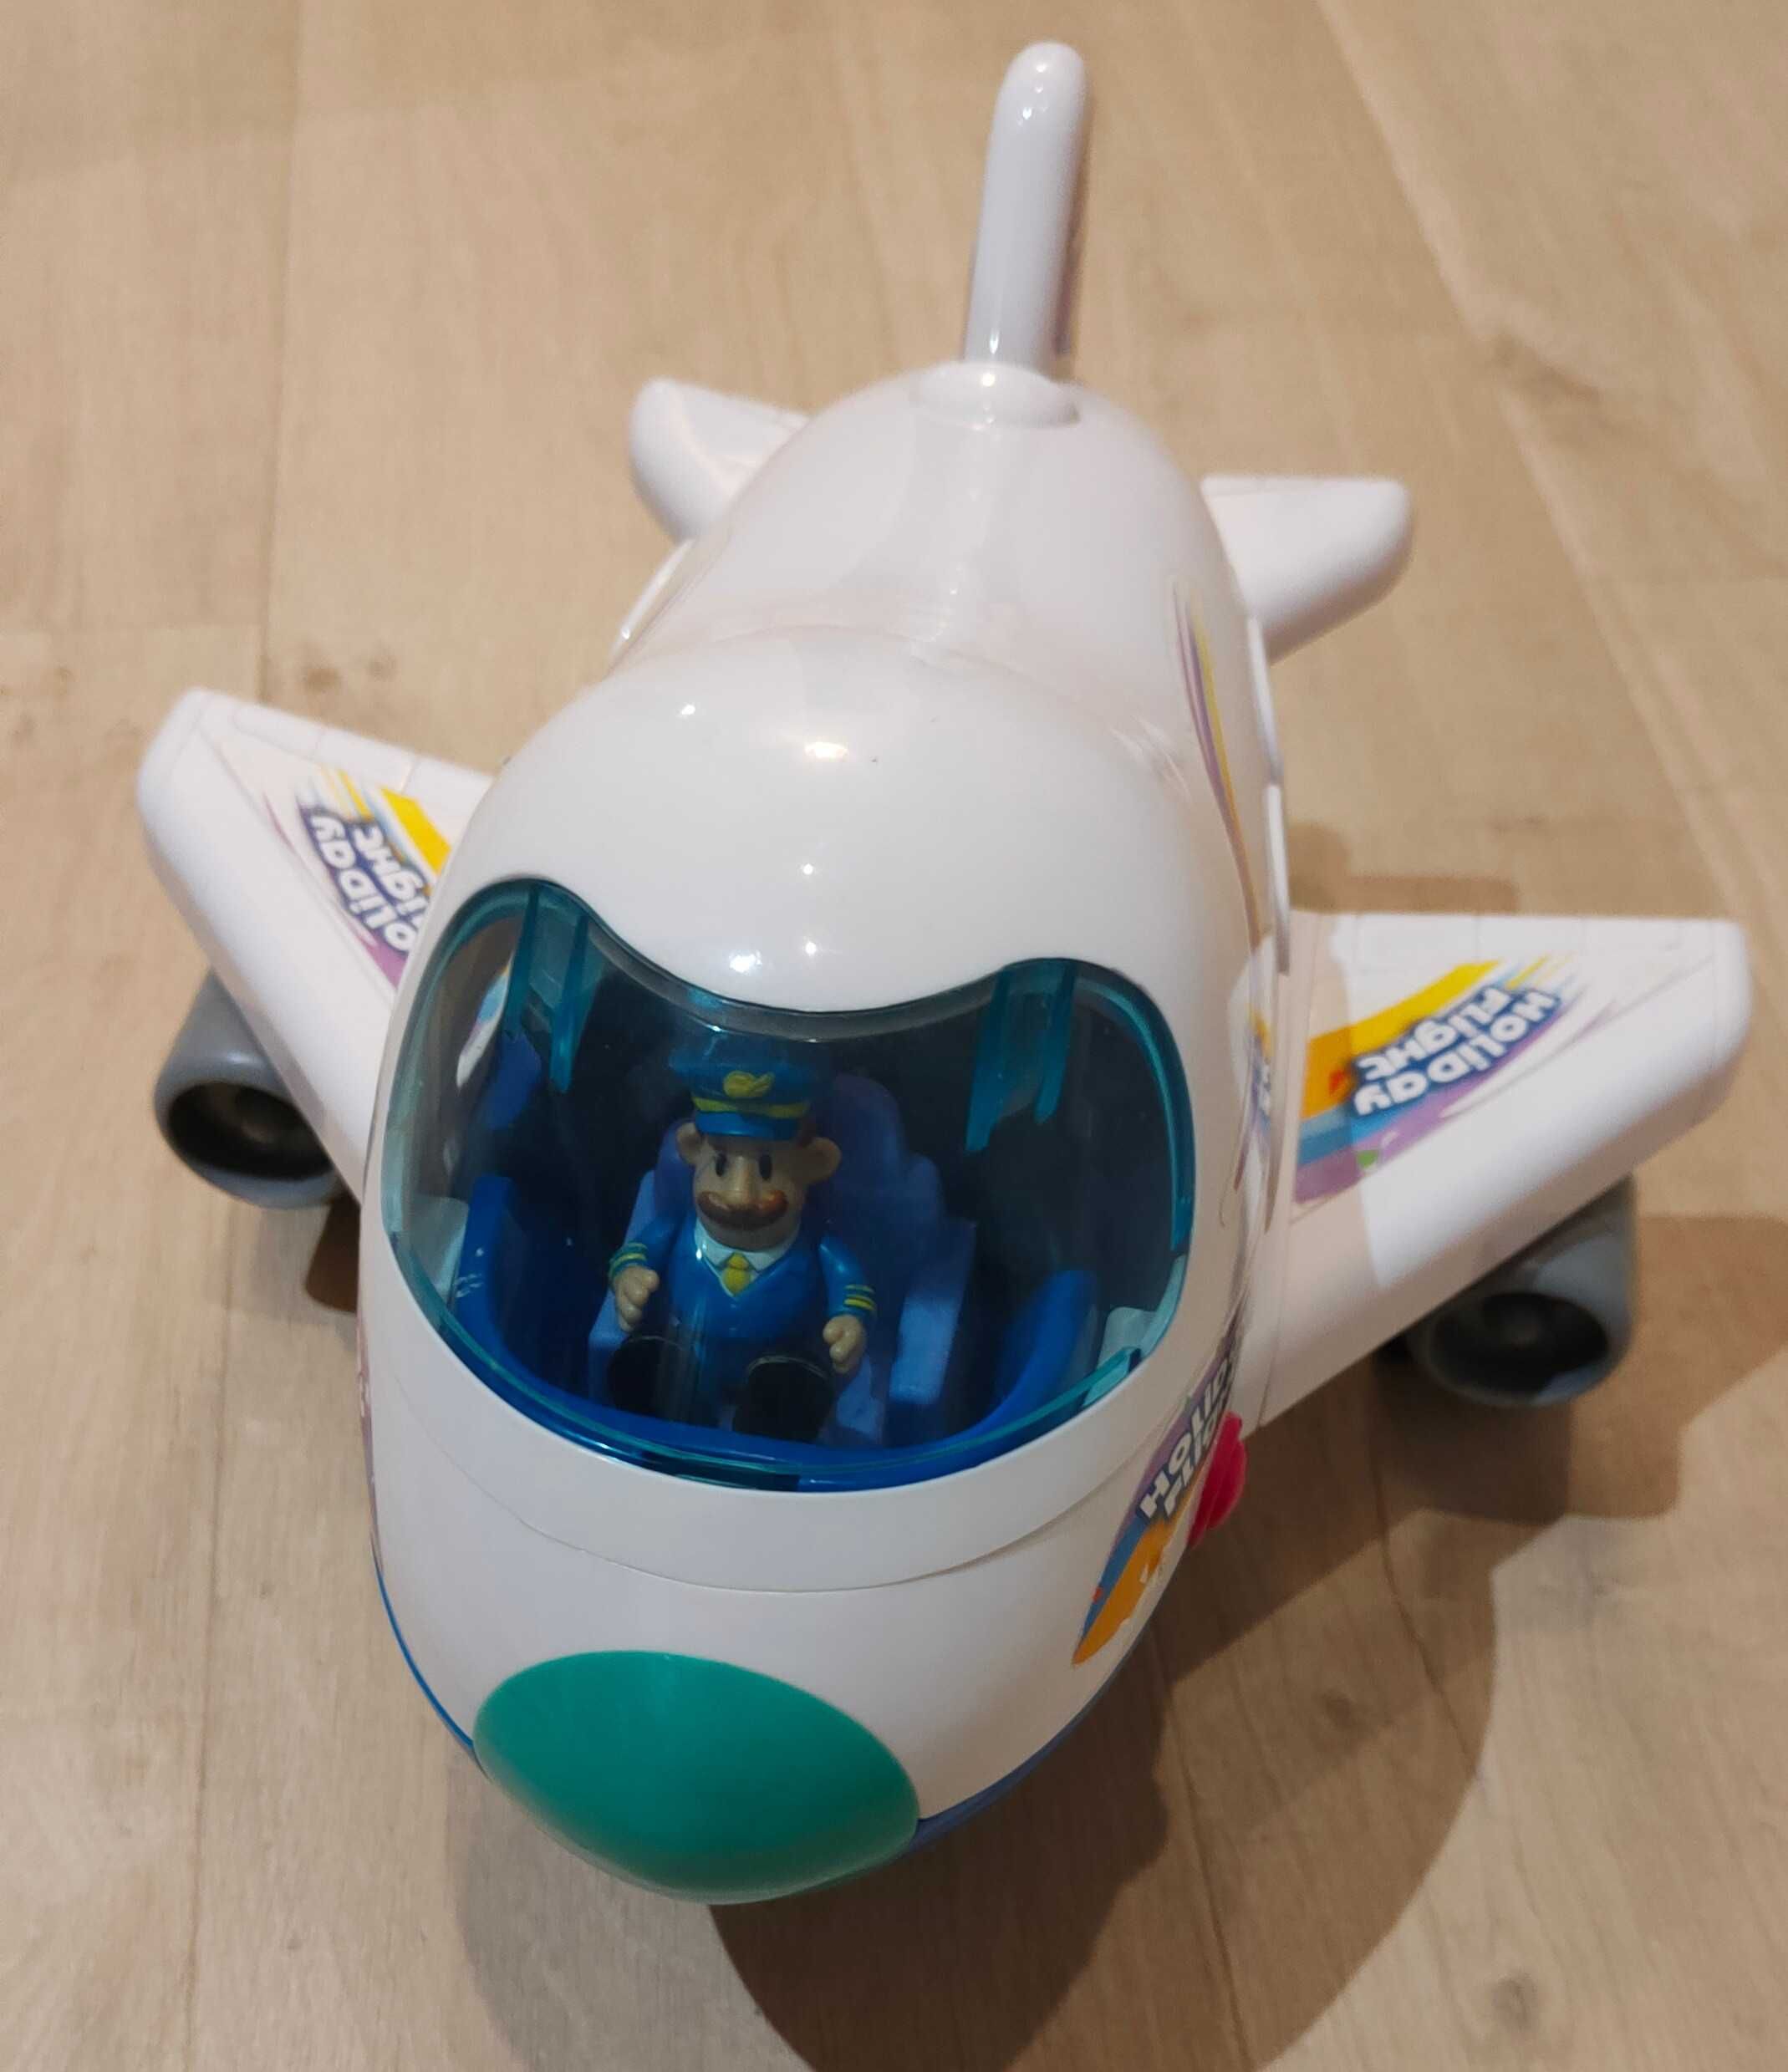 HOLIDAY FLIGHT Samolot Pasażerski + figurki. Wiek: 2+